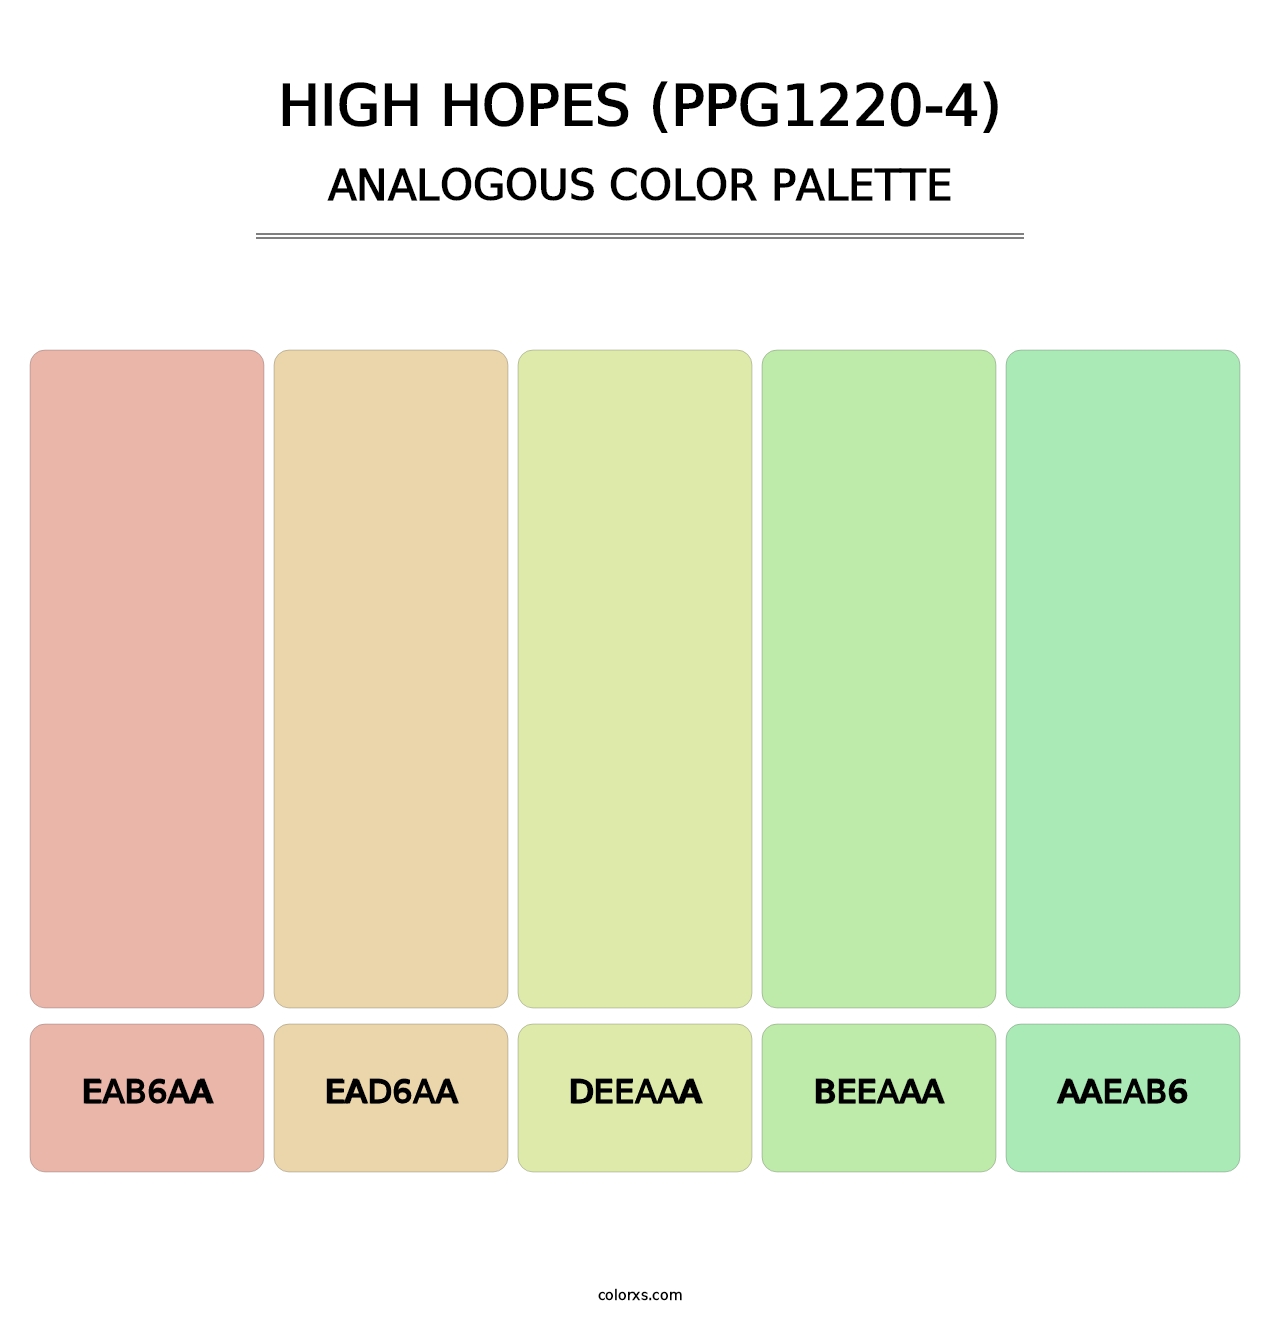 High Hopes (PPG1220-4) - Analogous Color Palette